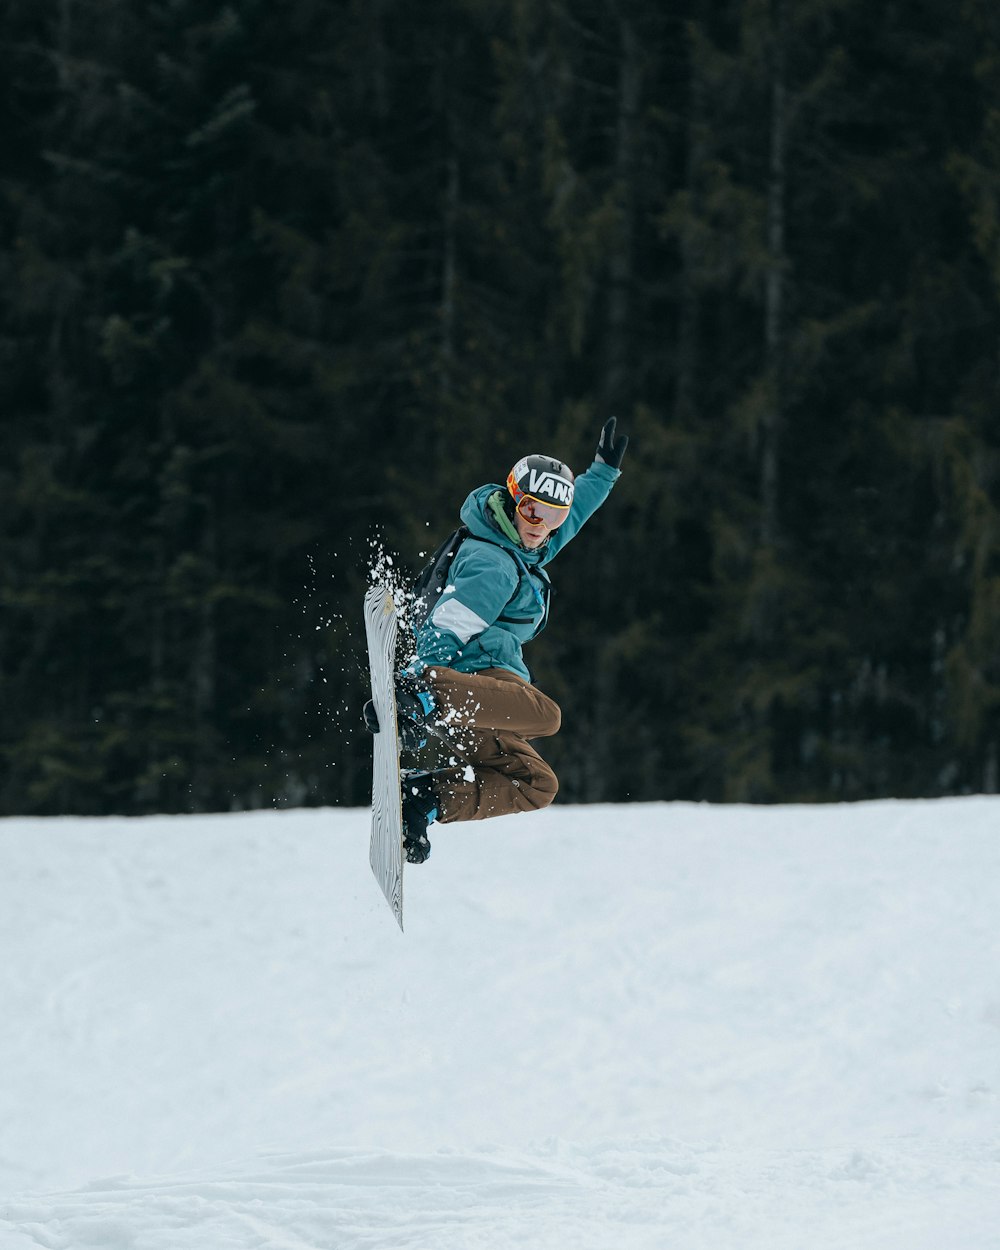 aftrekken spiritueel knelpunt A man flying through the air while riding a snowboard photo – Free Valberg  Image on Unsplash